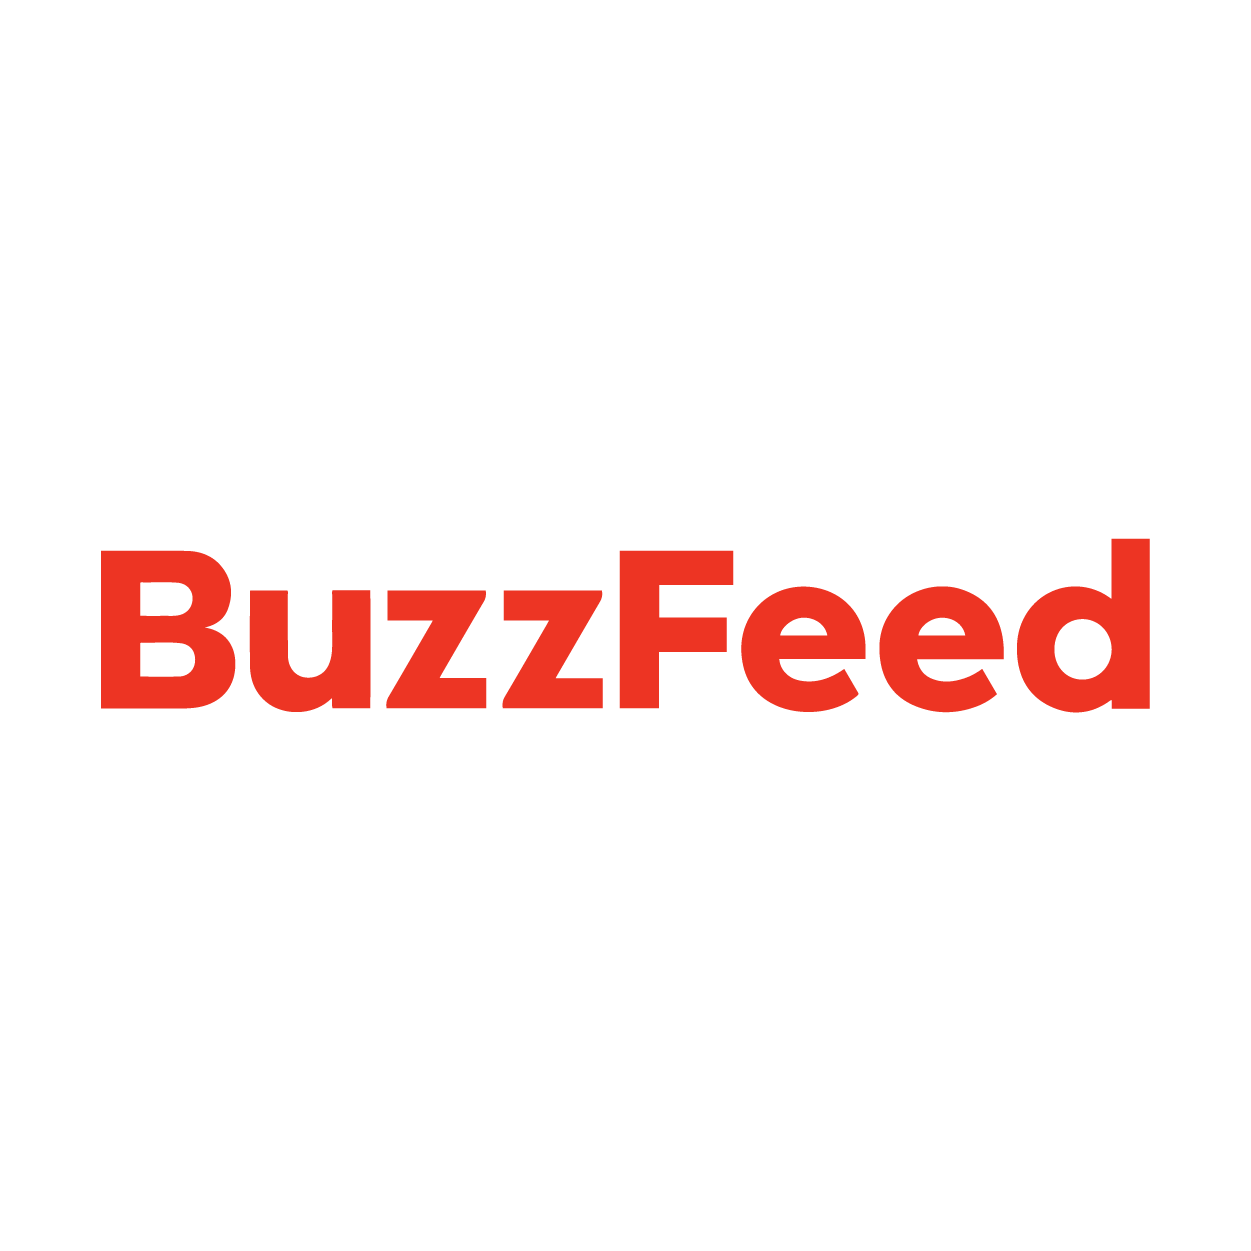 Meta Splurges On BuzzFeed To Tap Budding Content Creator Market